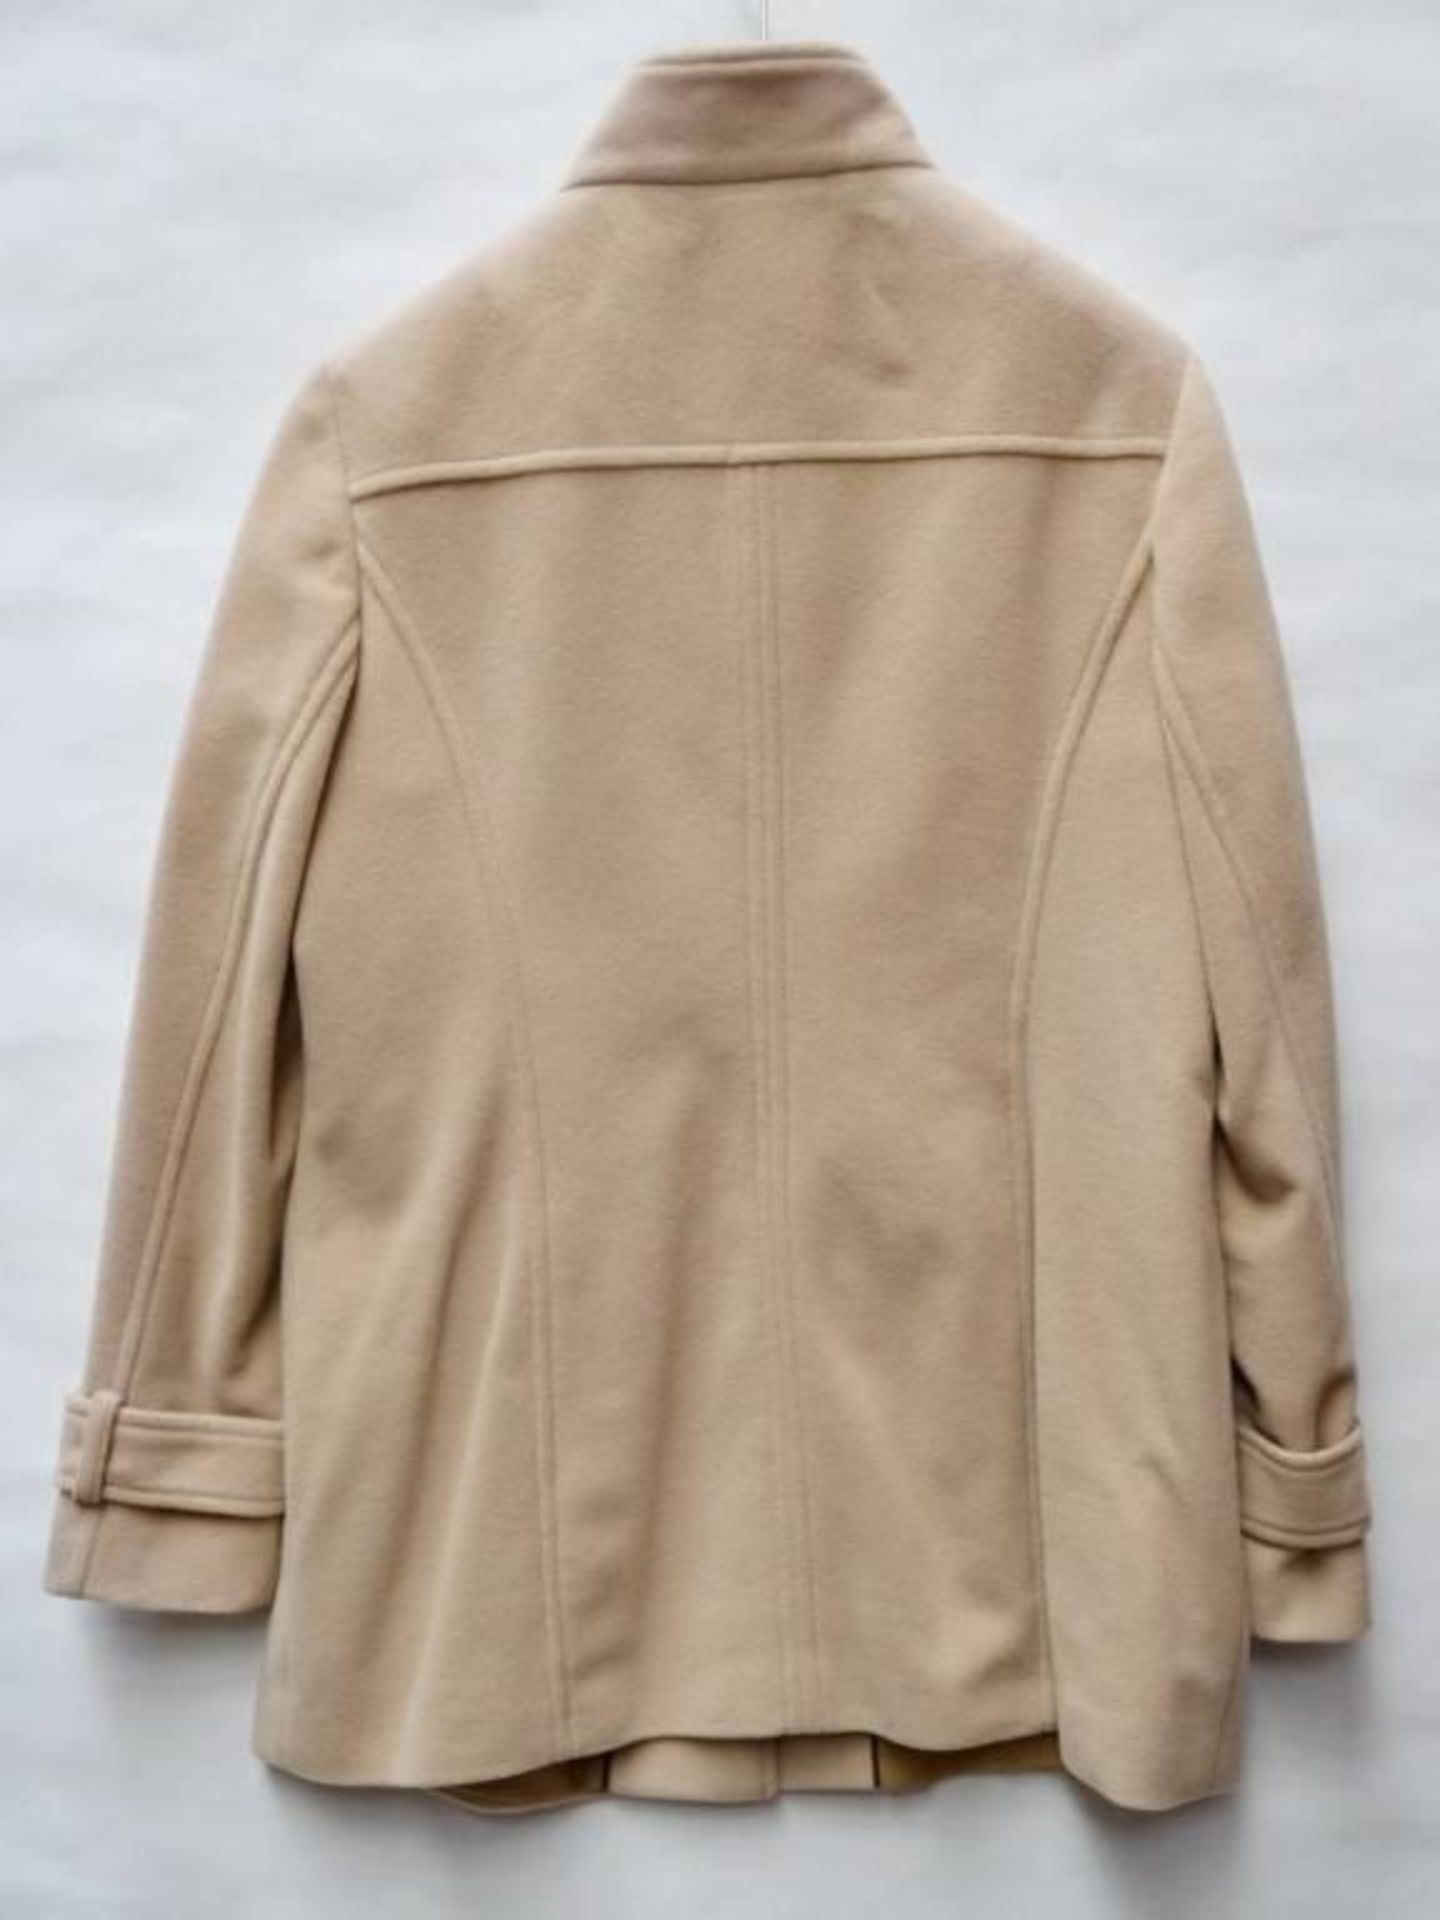 1 x Steilmann Womens Premium 'Virgin Wool & Cashmere' Winter Coat In Beige - UK Size 12 - New Sample - Image 2 of 3